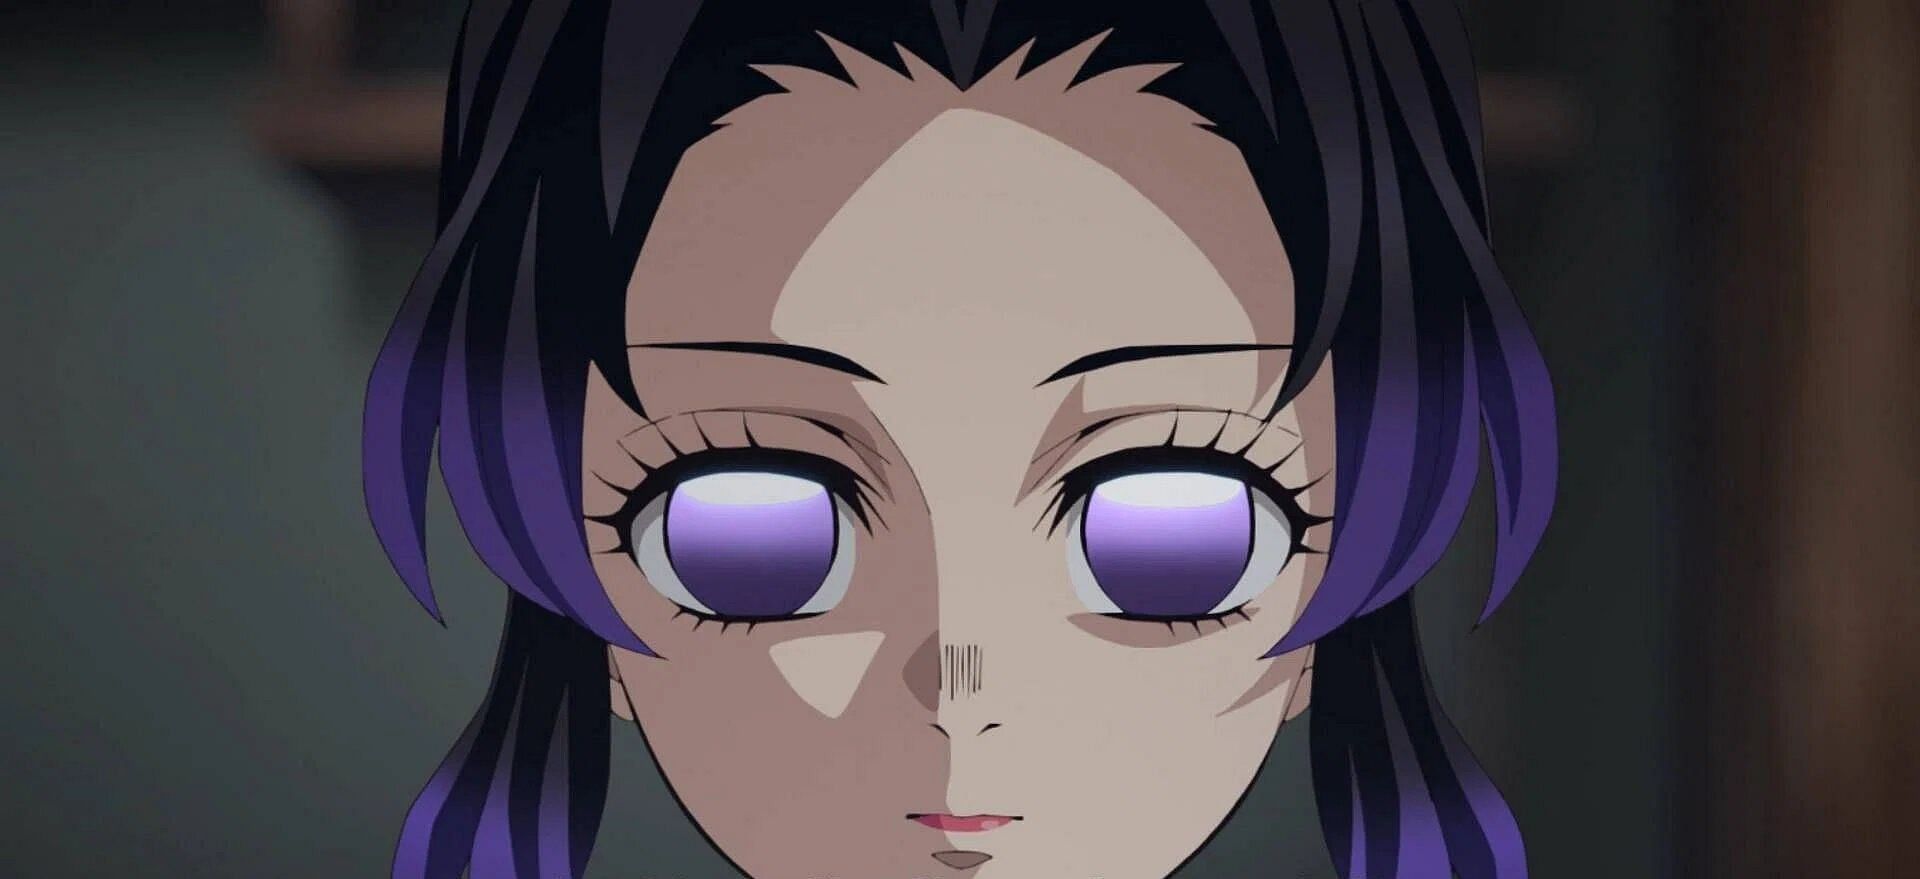 Shinobu in the fourth season of the anime (Image via Ufotable).